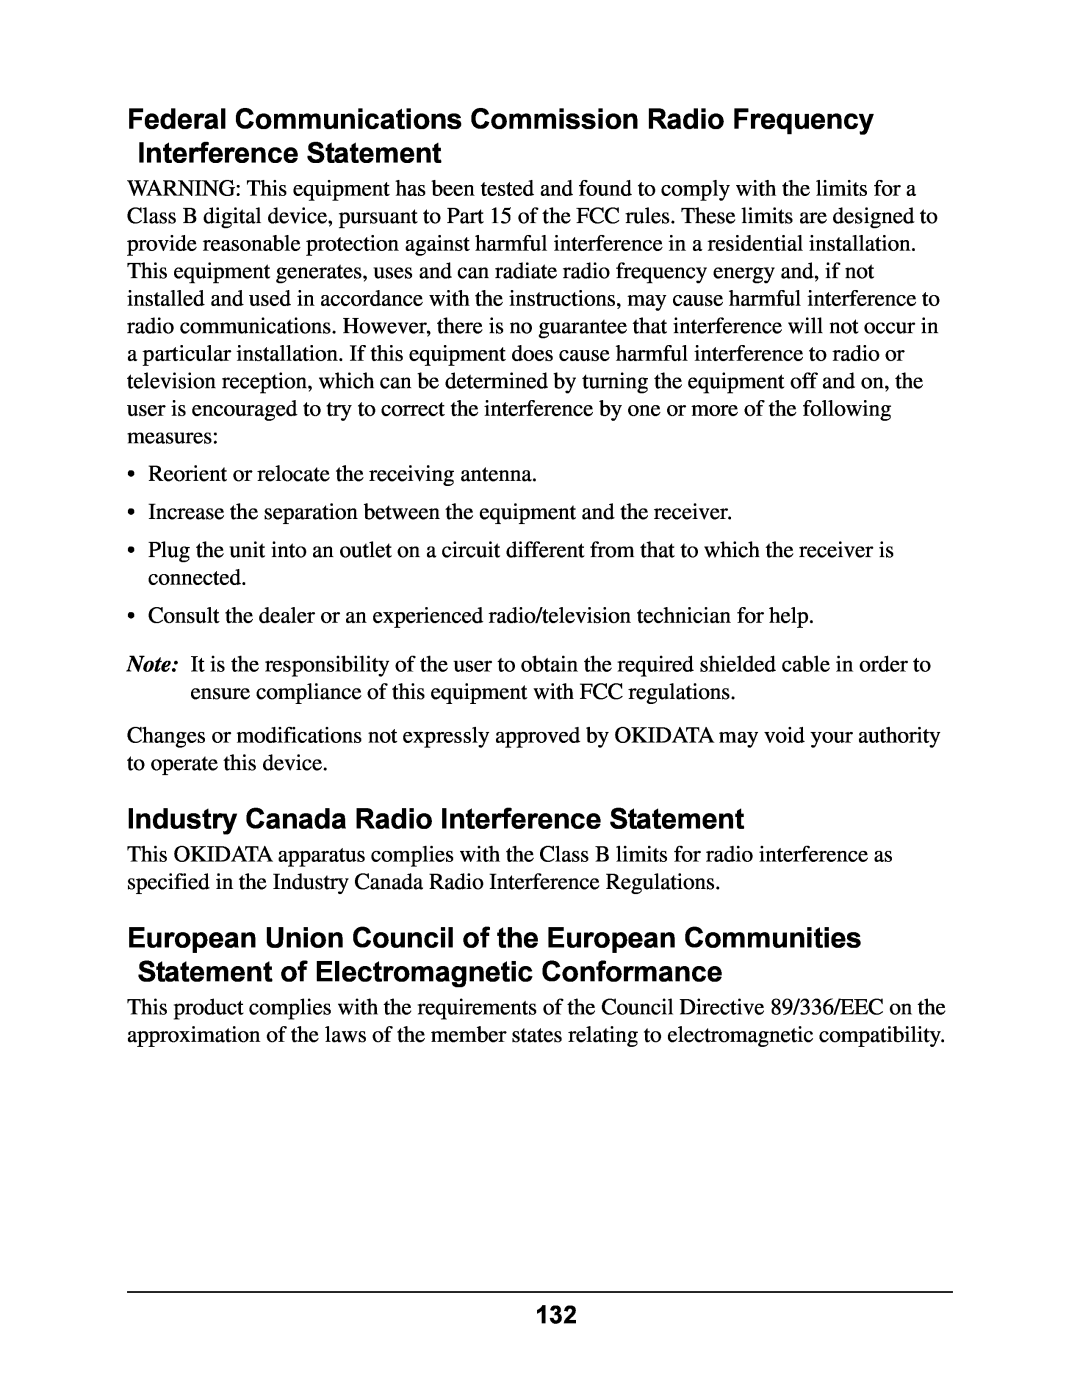 Oki 4410 manual Industry Canada Radio Interference Statement 